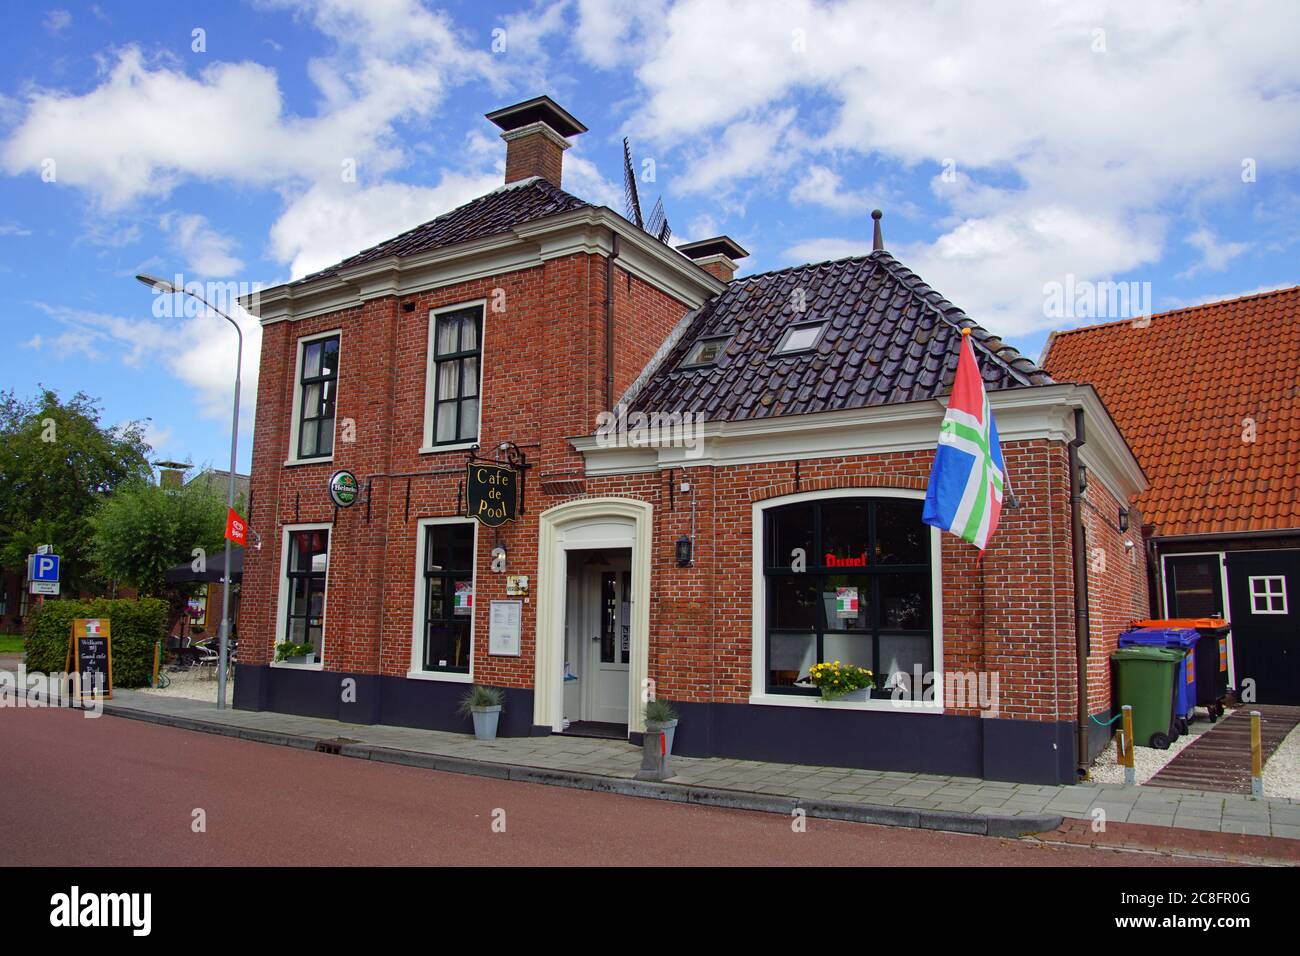 Eenrum, the Netherland - July 15, 2020:  Grand Cafe De Pool in the Dutch town of Eenrum. Stock Photo